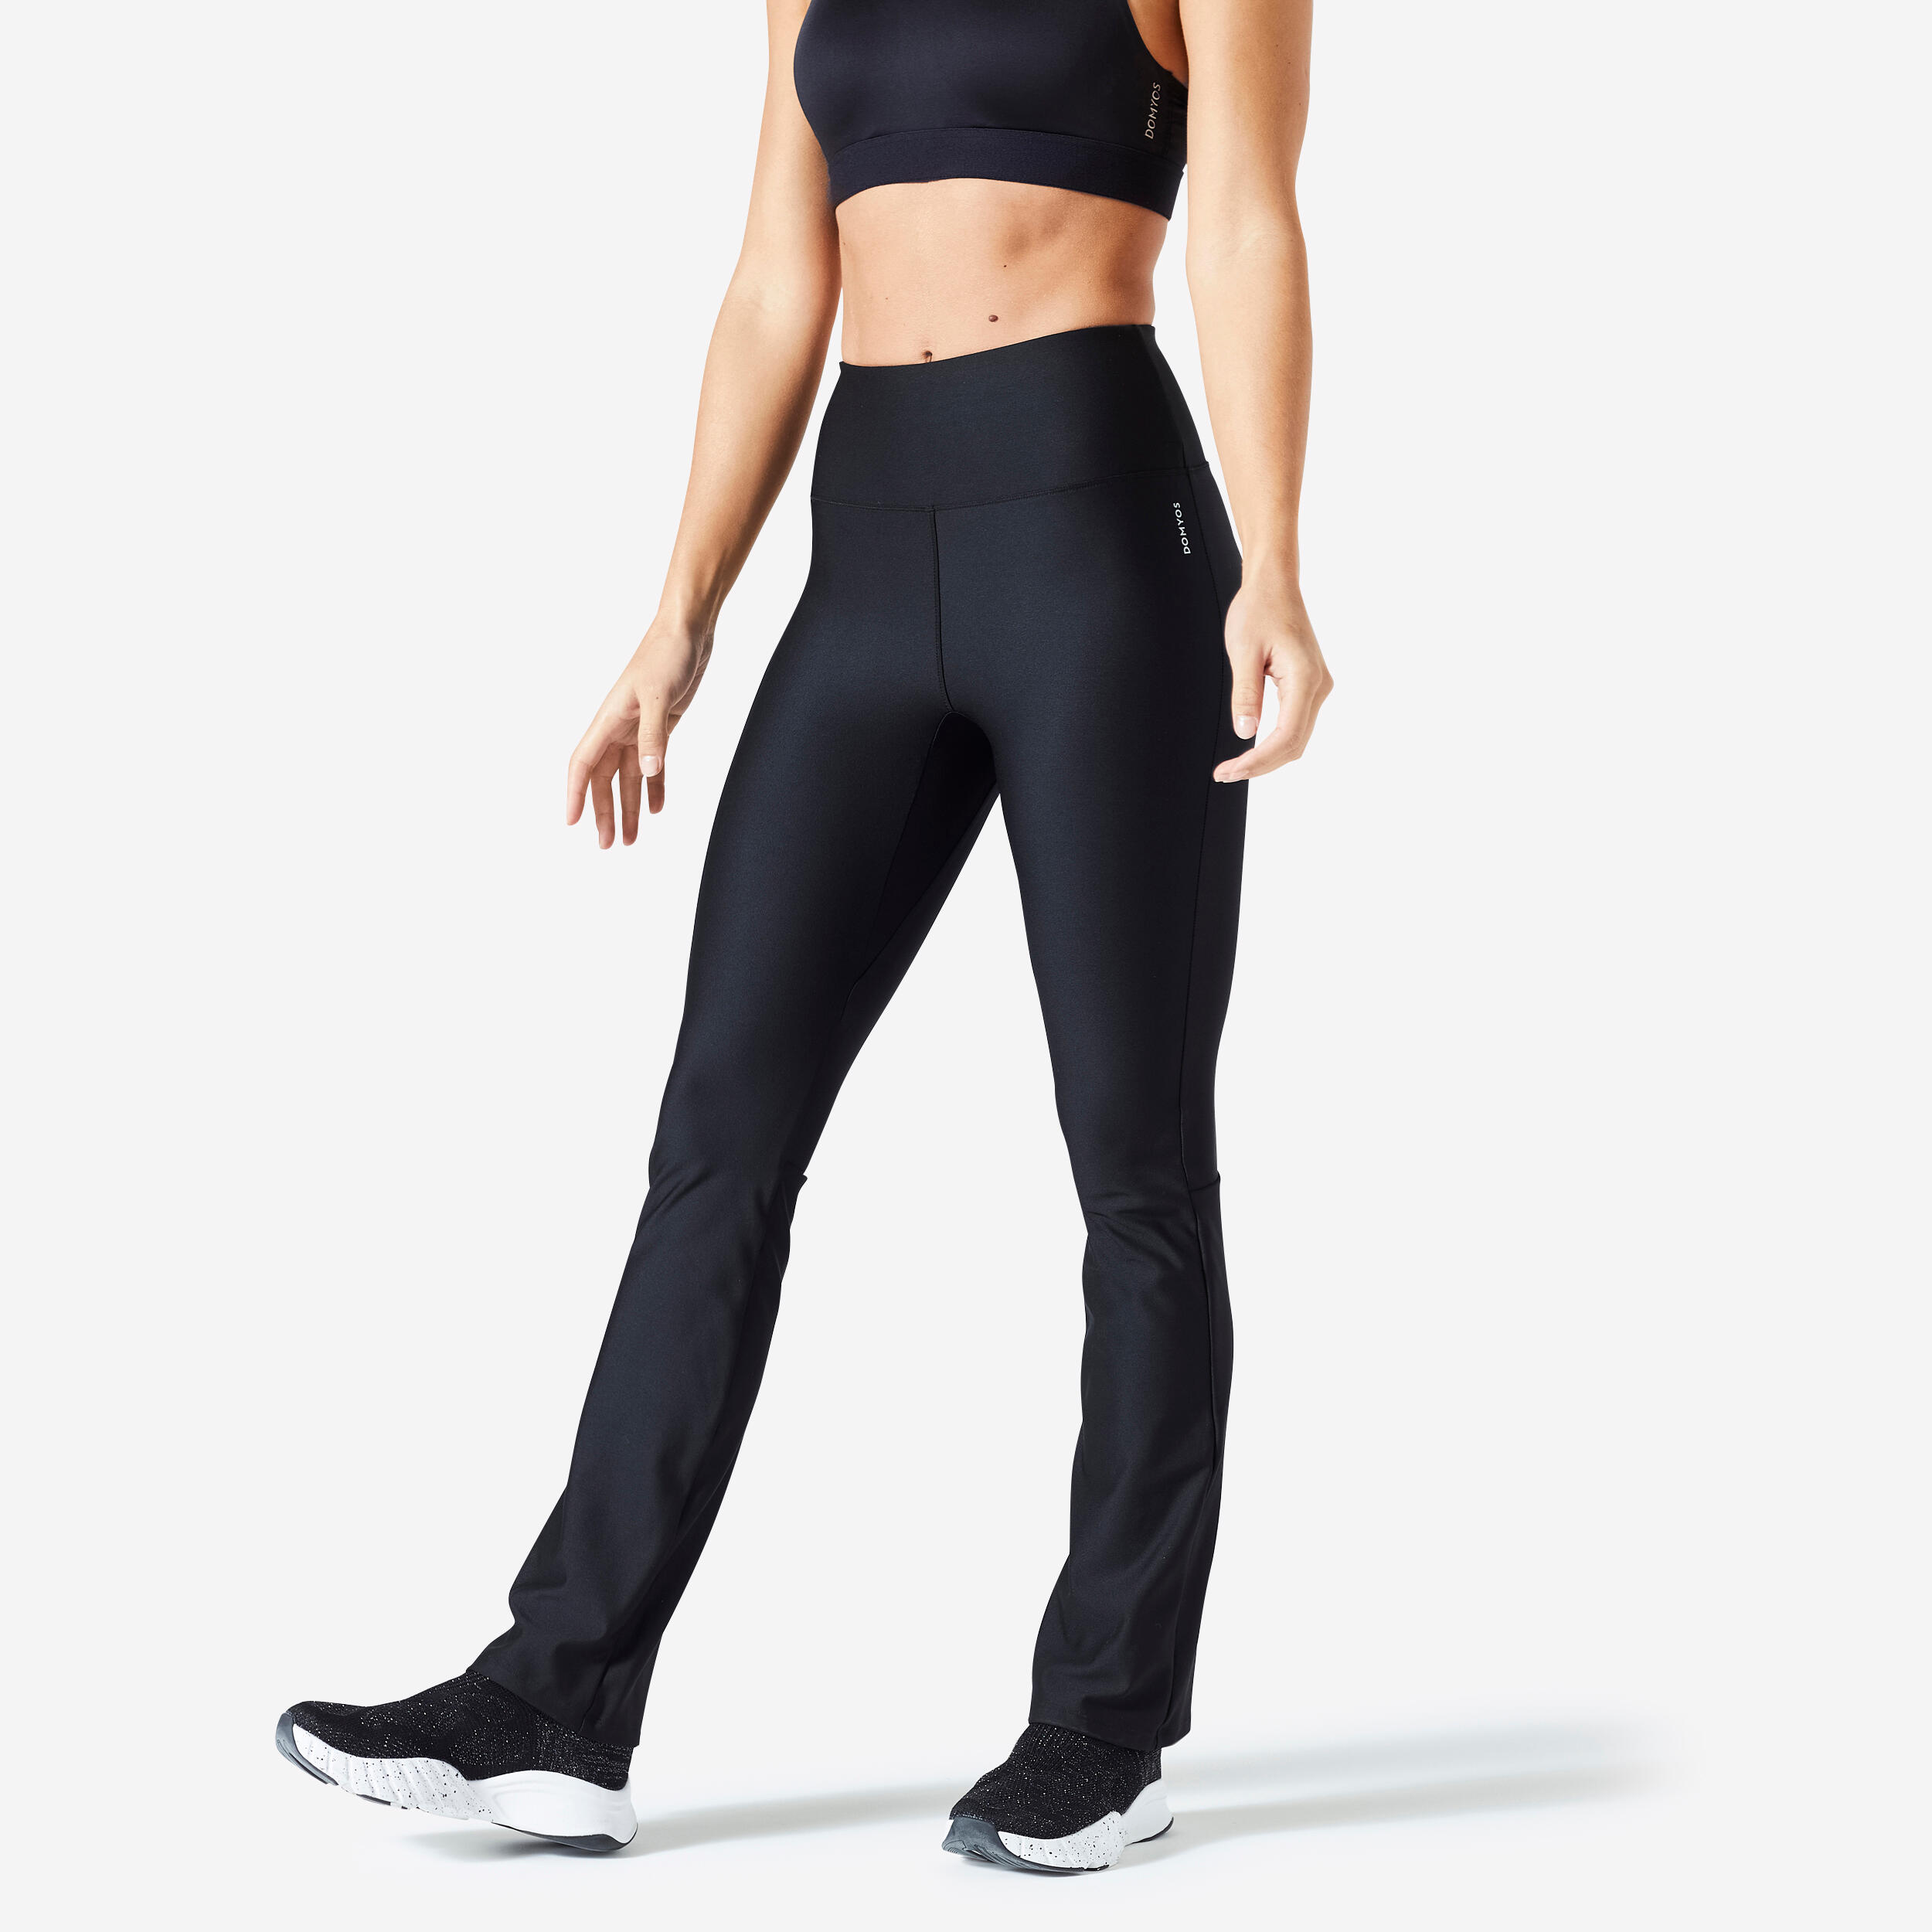 https://contents.mediadecathlon.com/p2429341/k$df96c7dc27dd1f28df54a79d104b4500/women-s-fitness-cardio-straight-leg-leggings-black-domyos-8739233.jpg